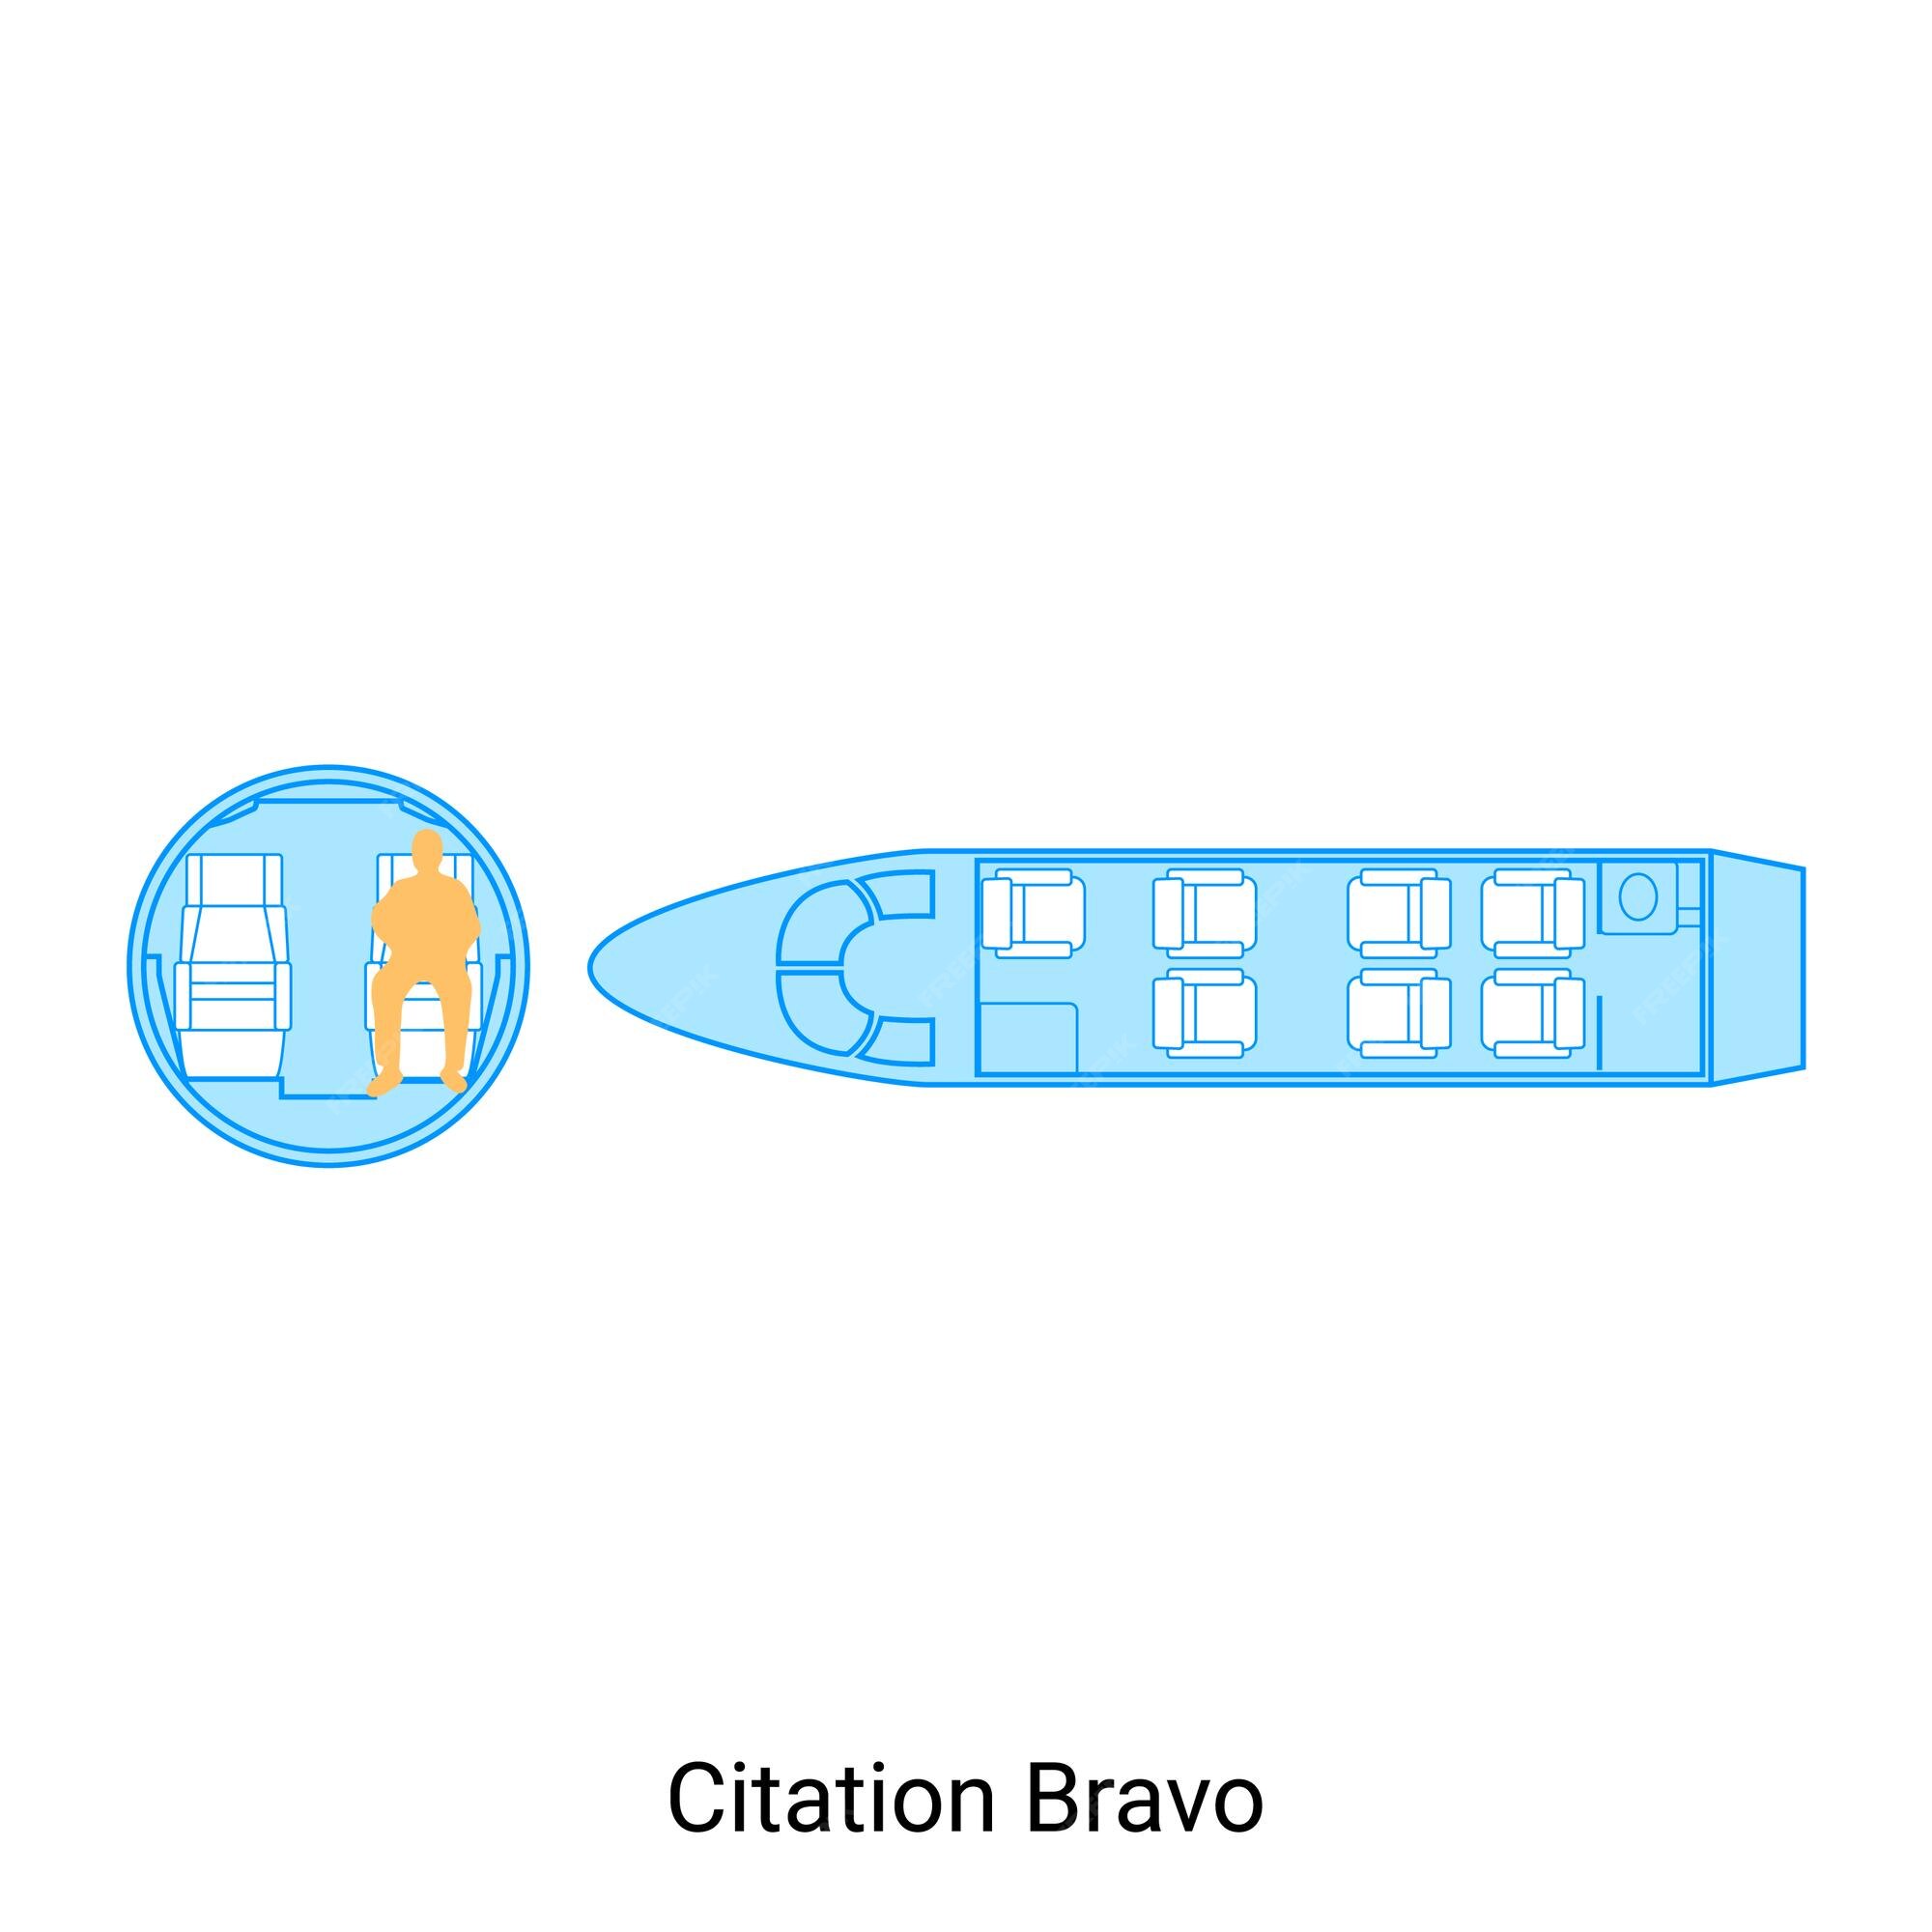 Premium Vector | Citation bravo airplane scheme civil aircraft guide